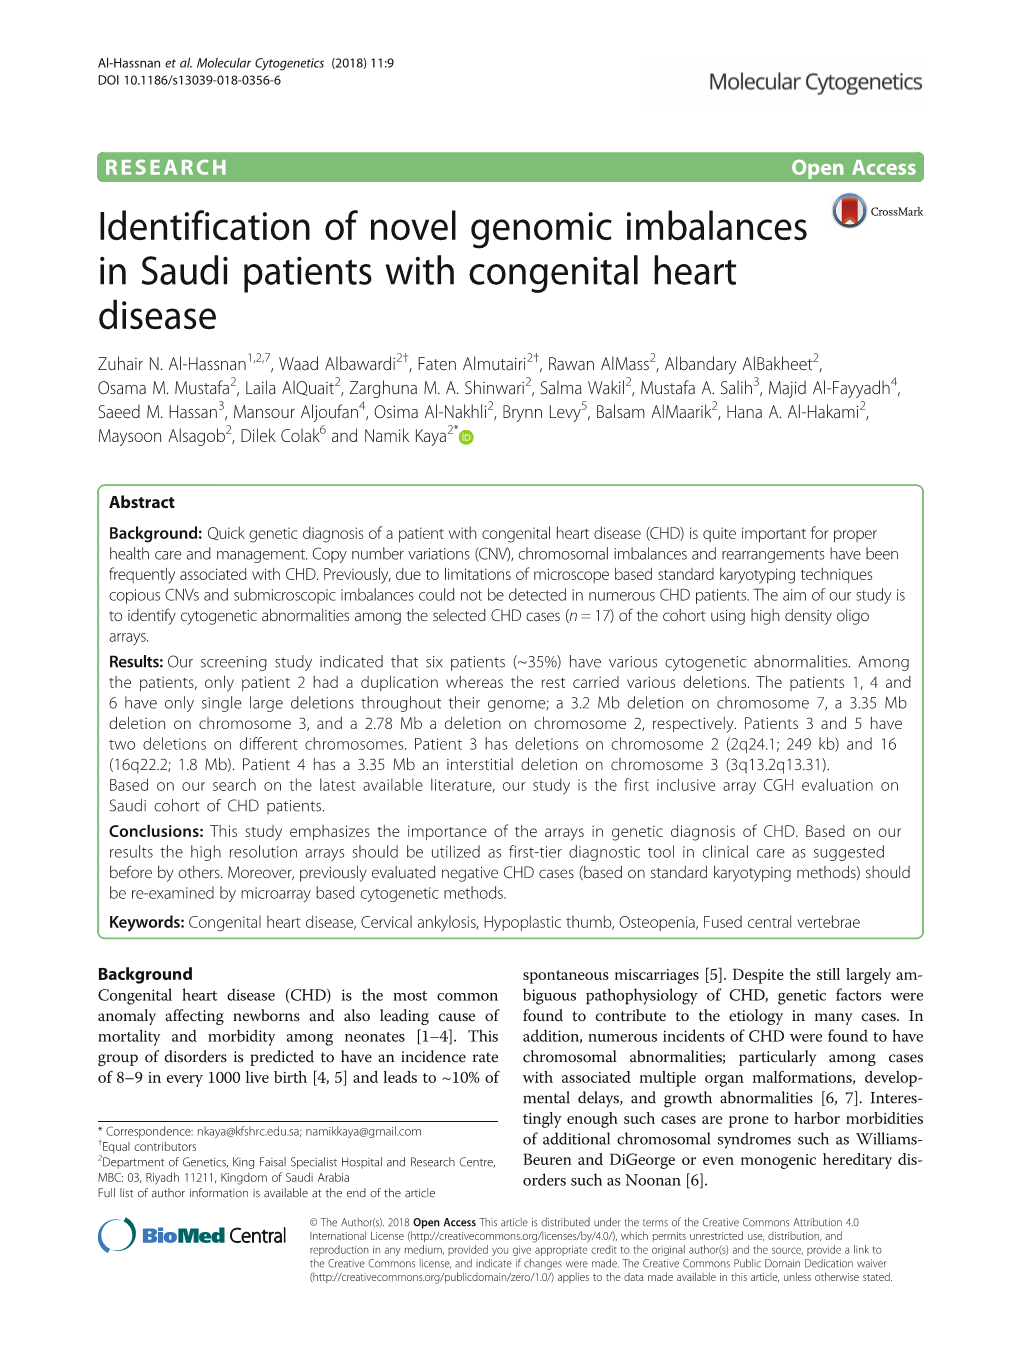 Identification of Novel Genomic Imbalances in Saudi Patients with Congenital Heart Disease Zuhair N